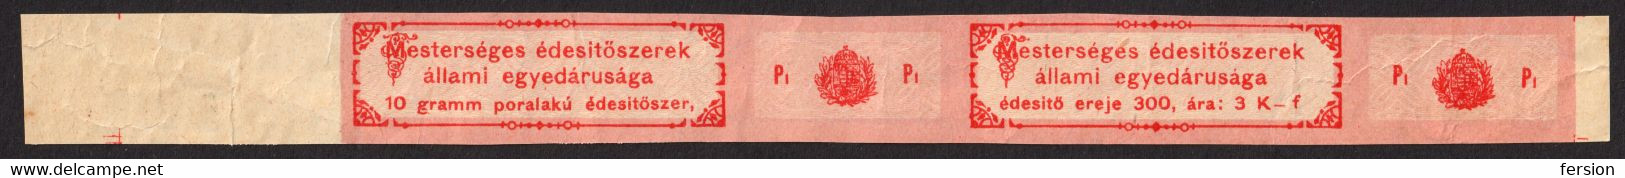 1912 Hungary - SUGAR Substitute Seal Tax Stamp Stripe P1 - 3.- K - Revenue Tax SEAL - MBIK Cat. No. 1. - Steuermarken